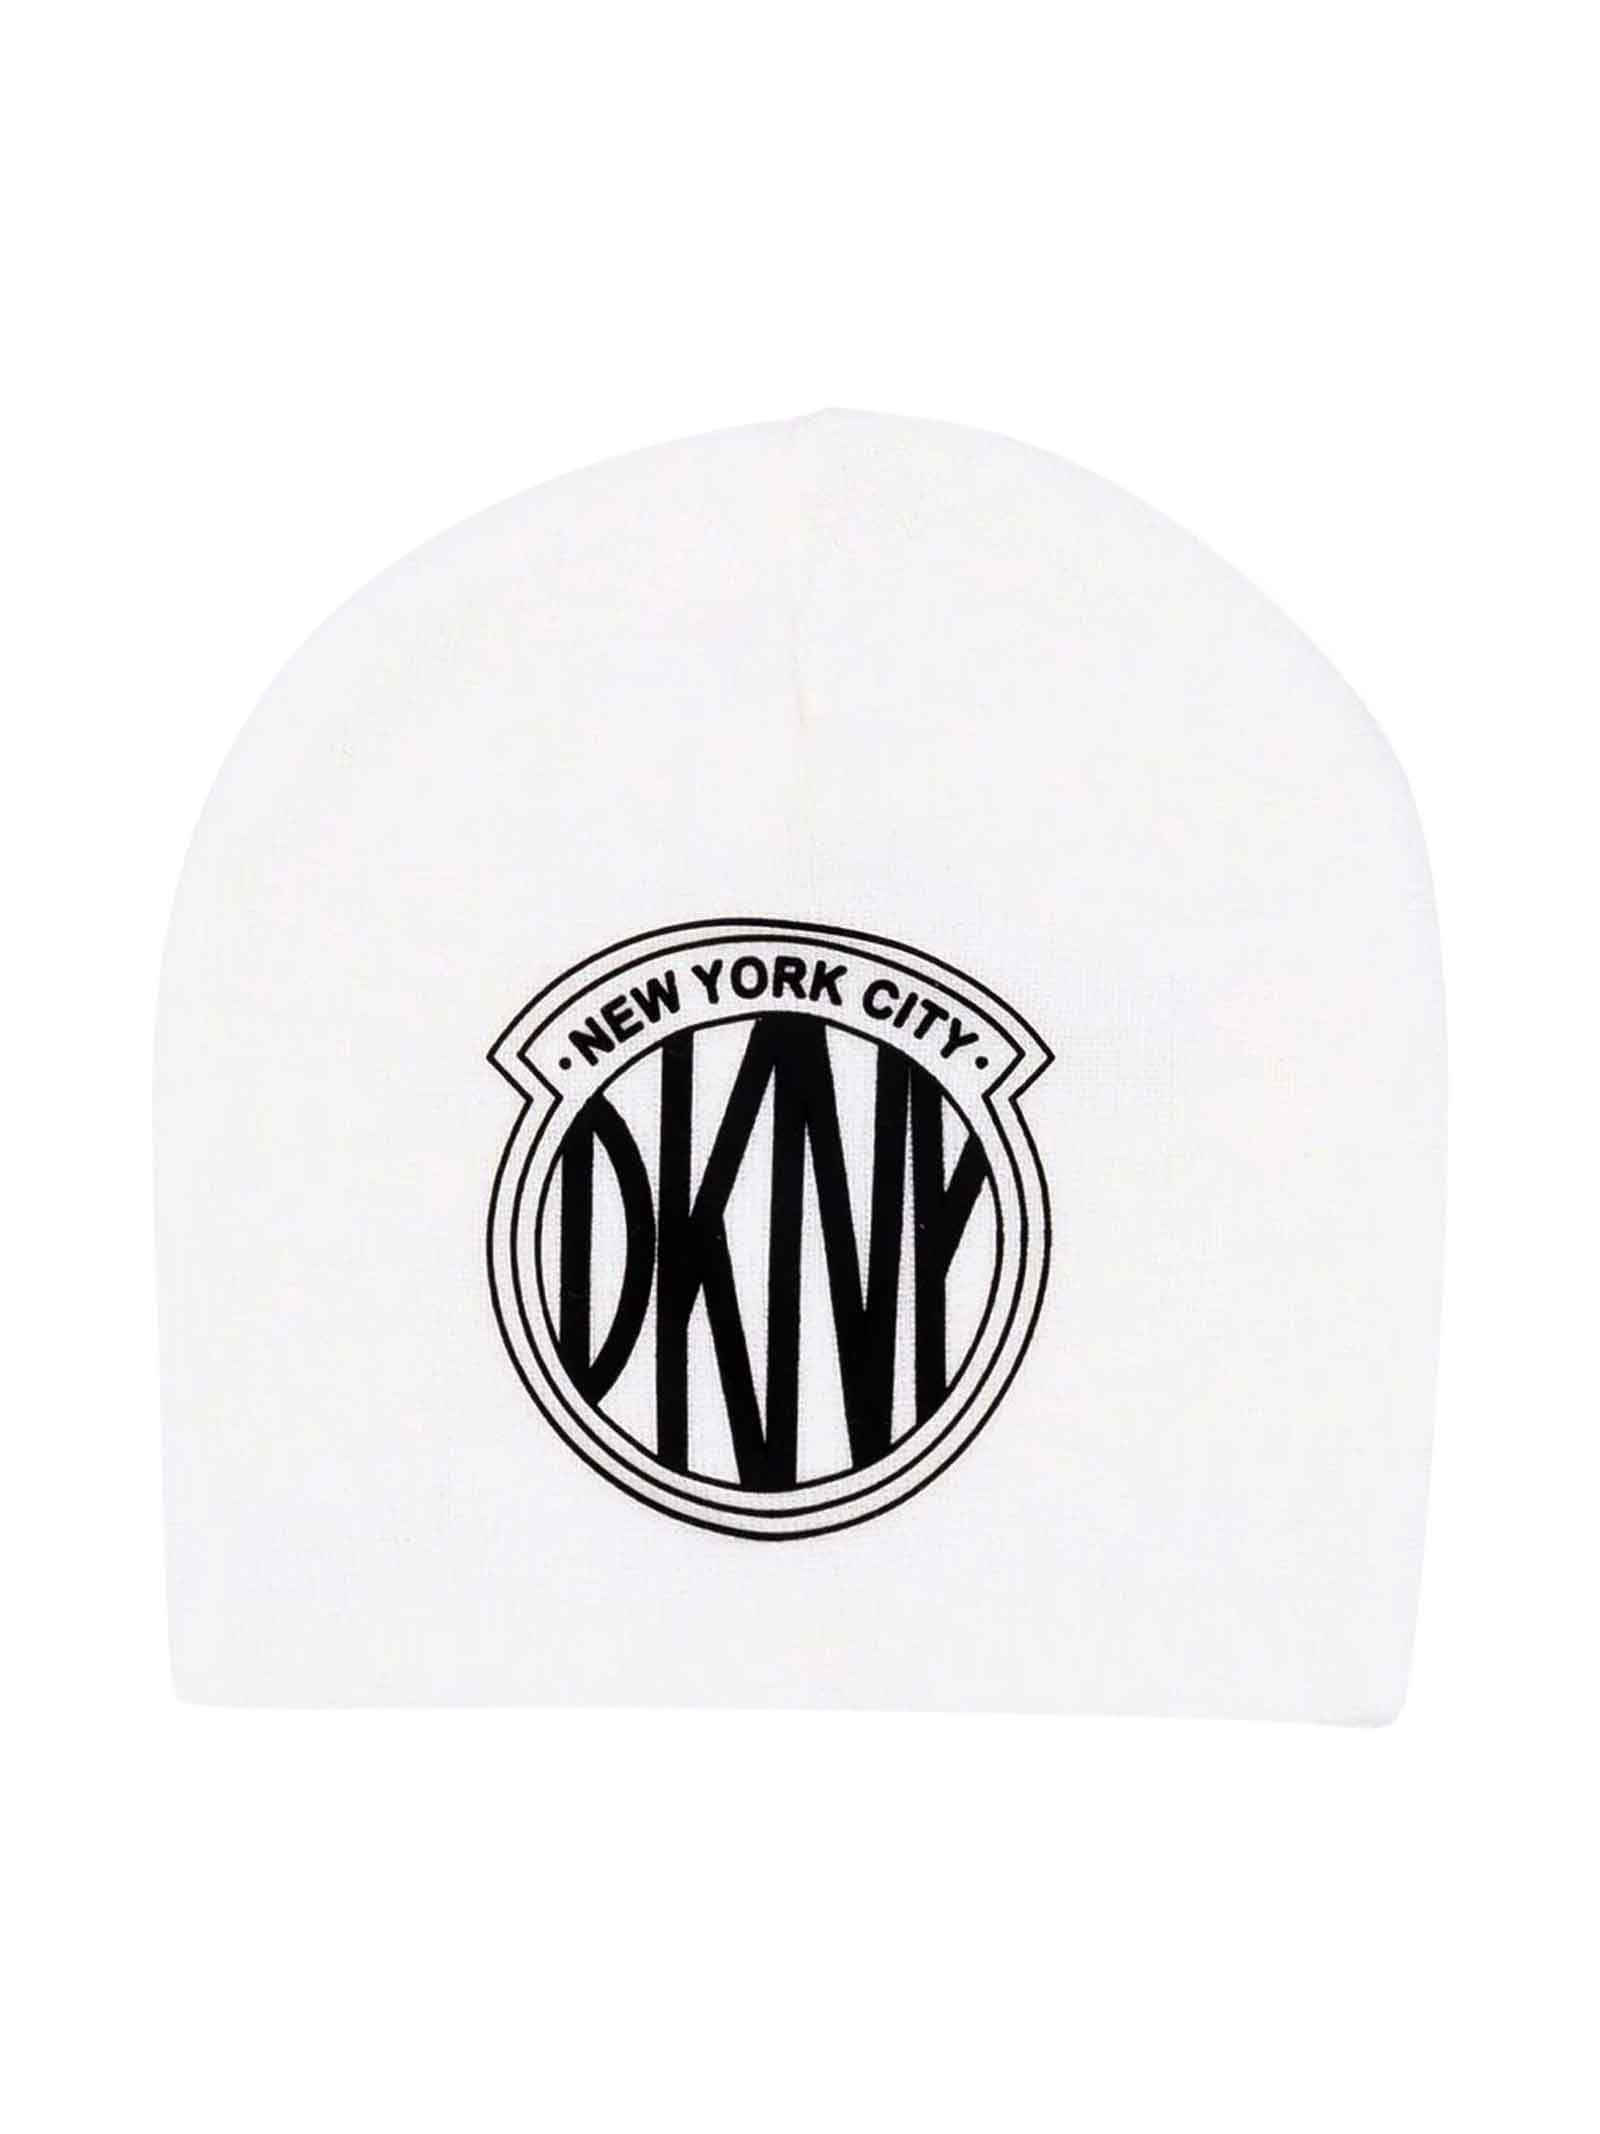 DKNY Unisex White Cap